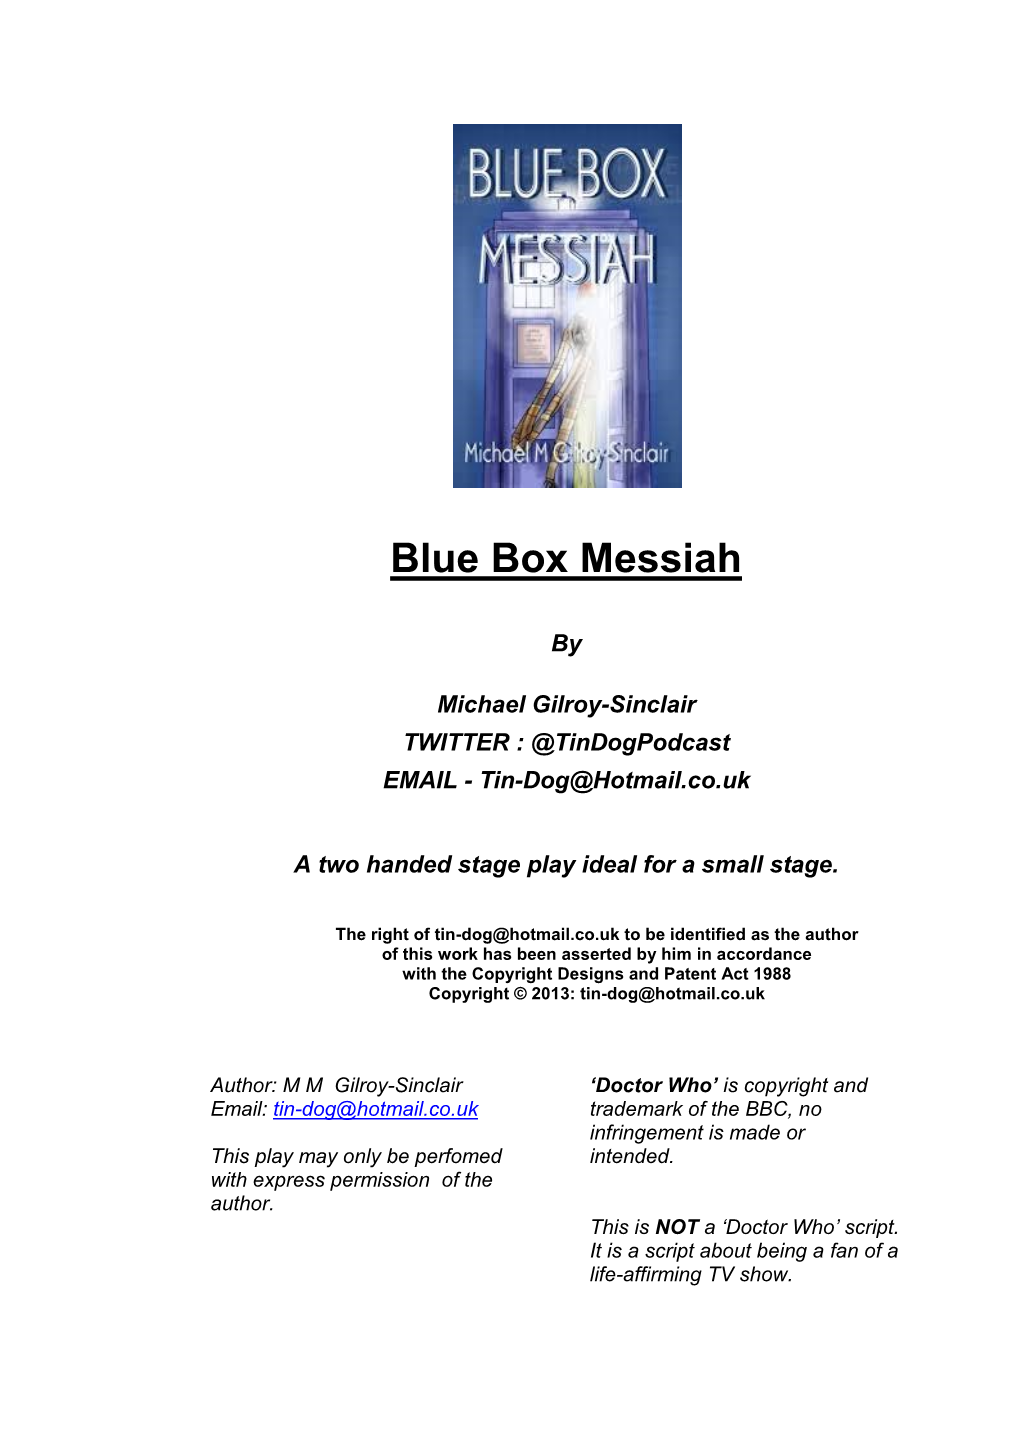 BLUE BOX MESSIAH by @Tindogpodcast